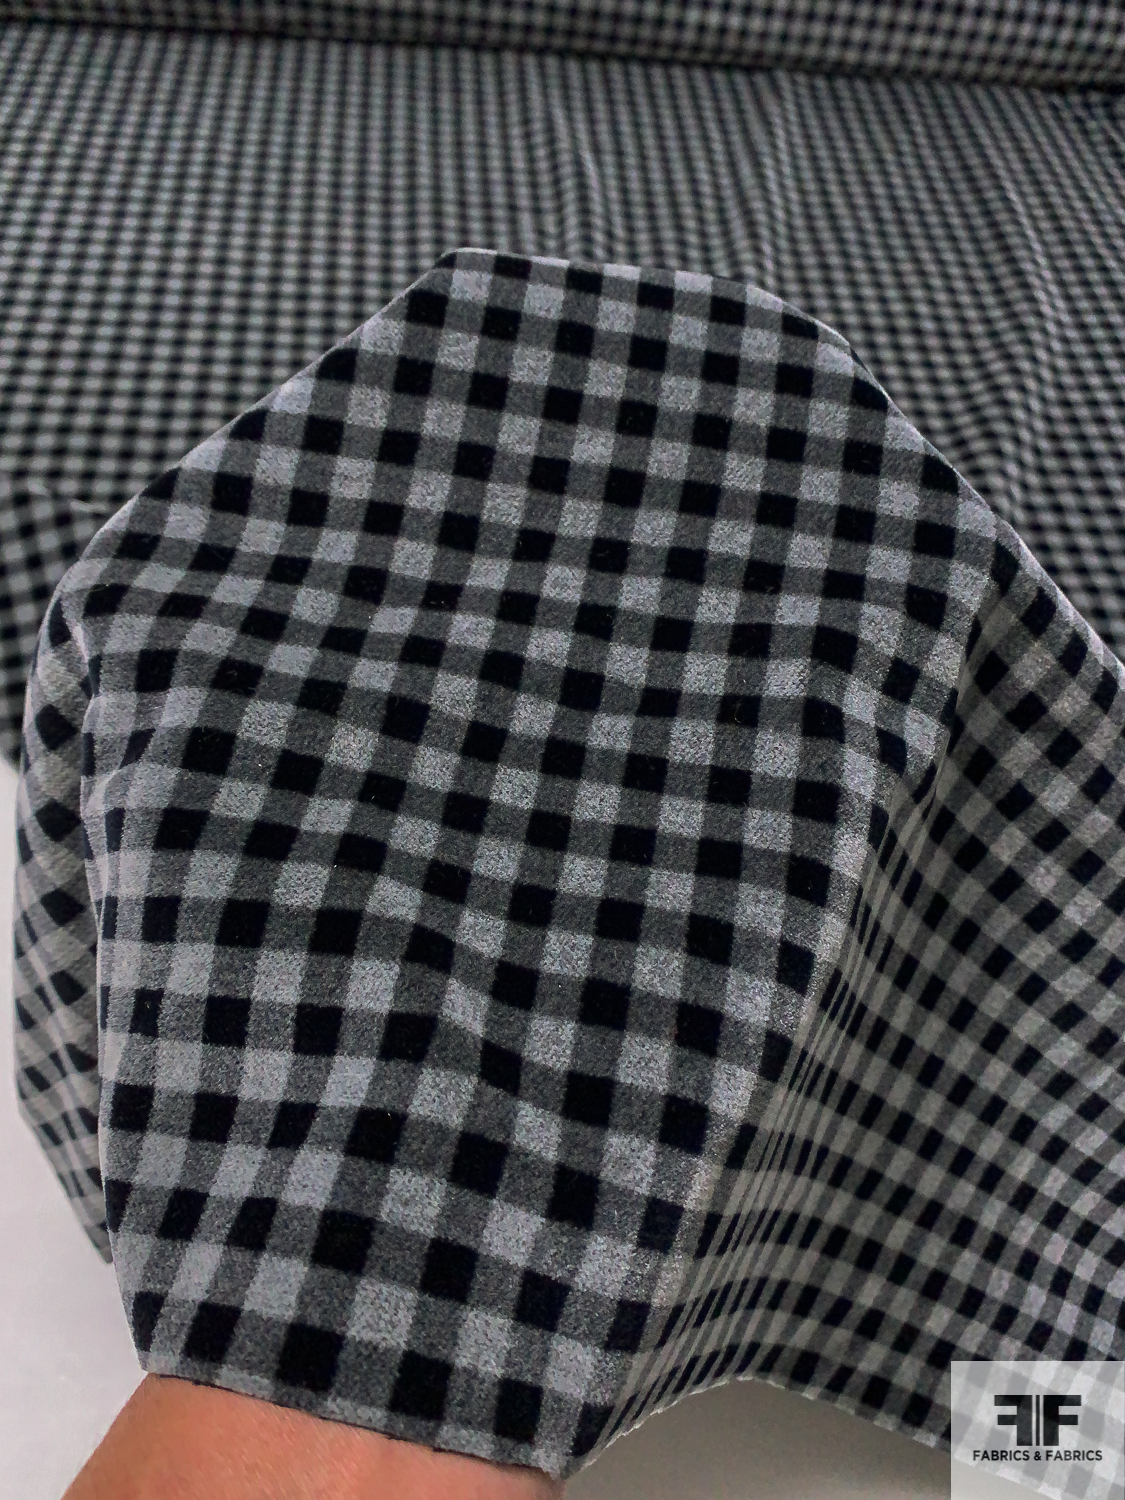 Italian Gingham Check Printed Cotton Velveteen - Grey / Black